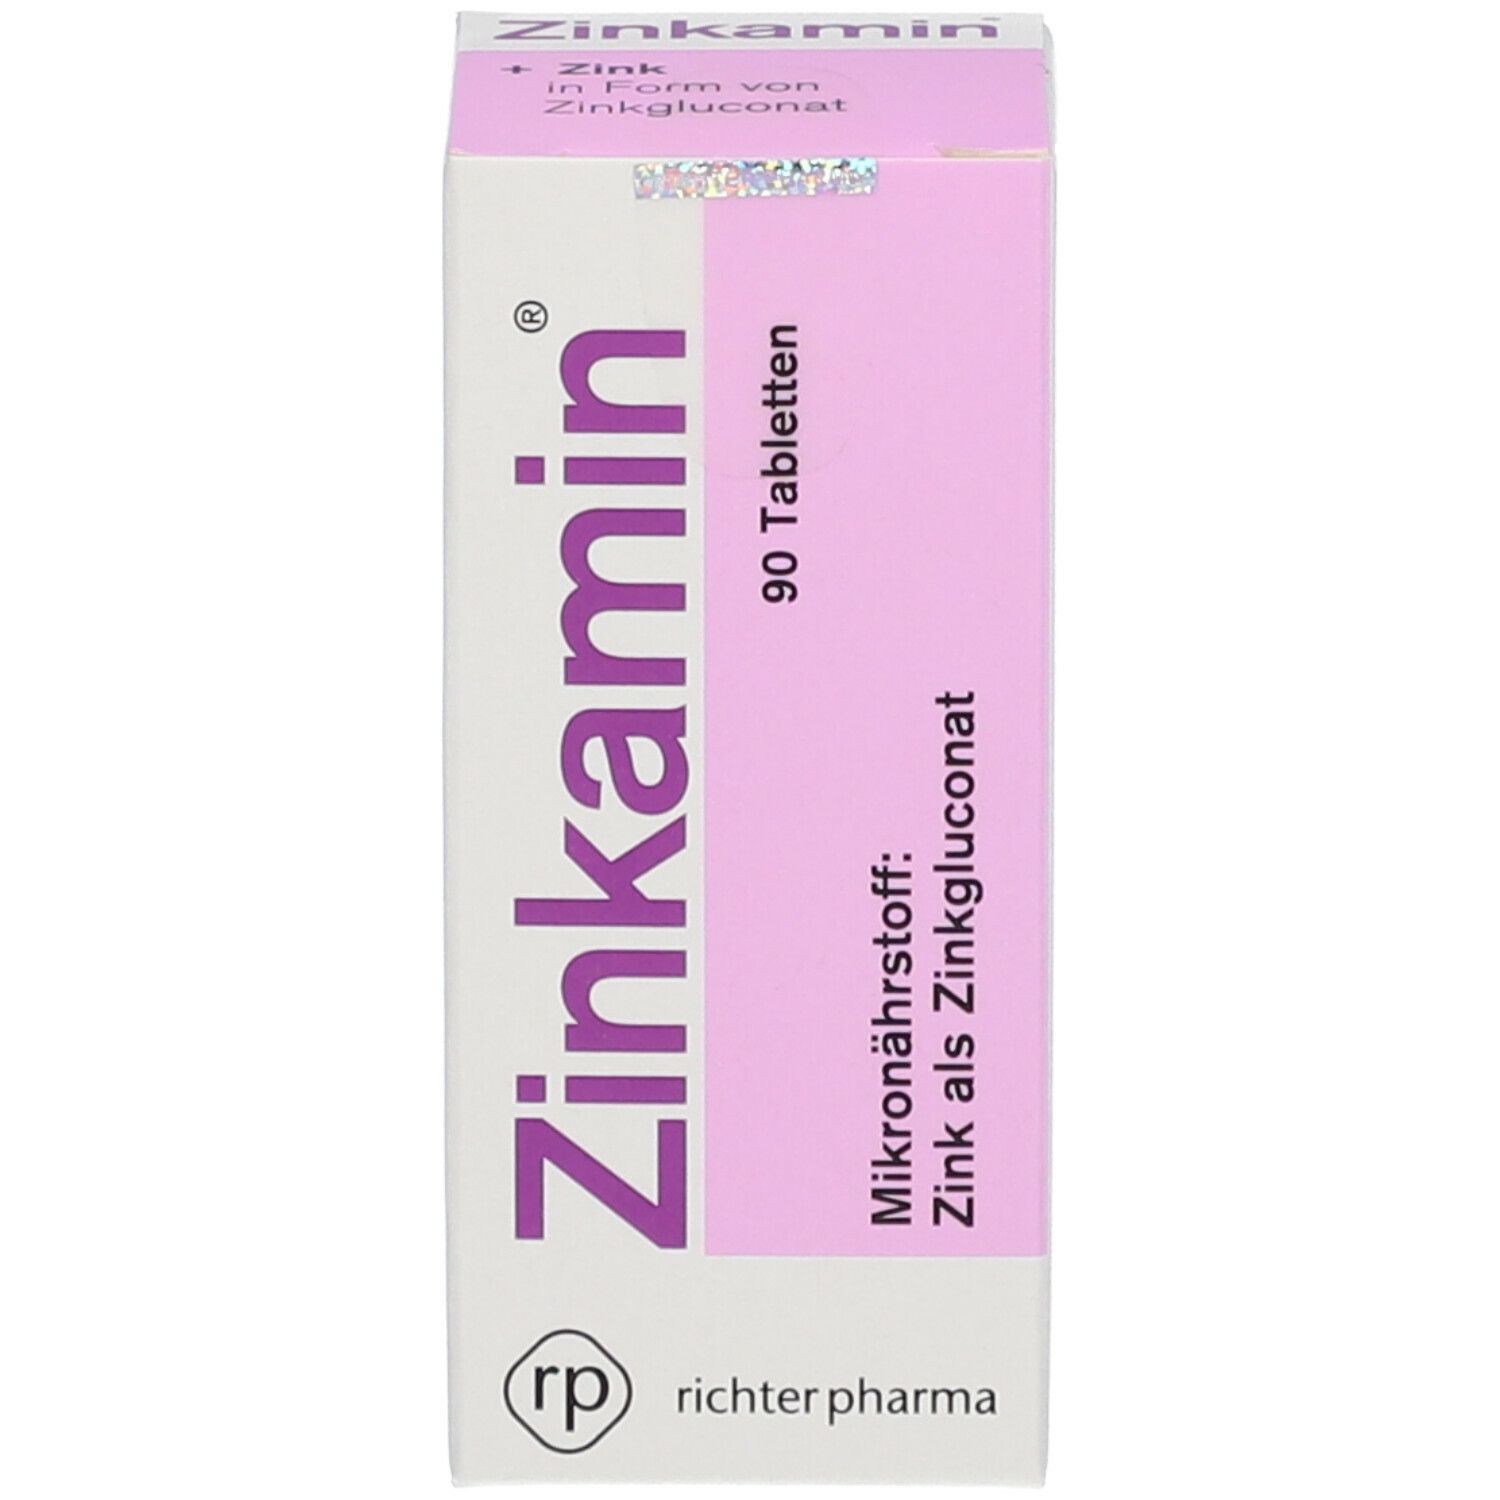 Zinkamin® Tabletten